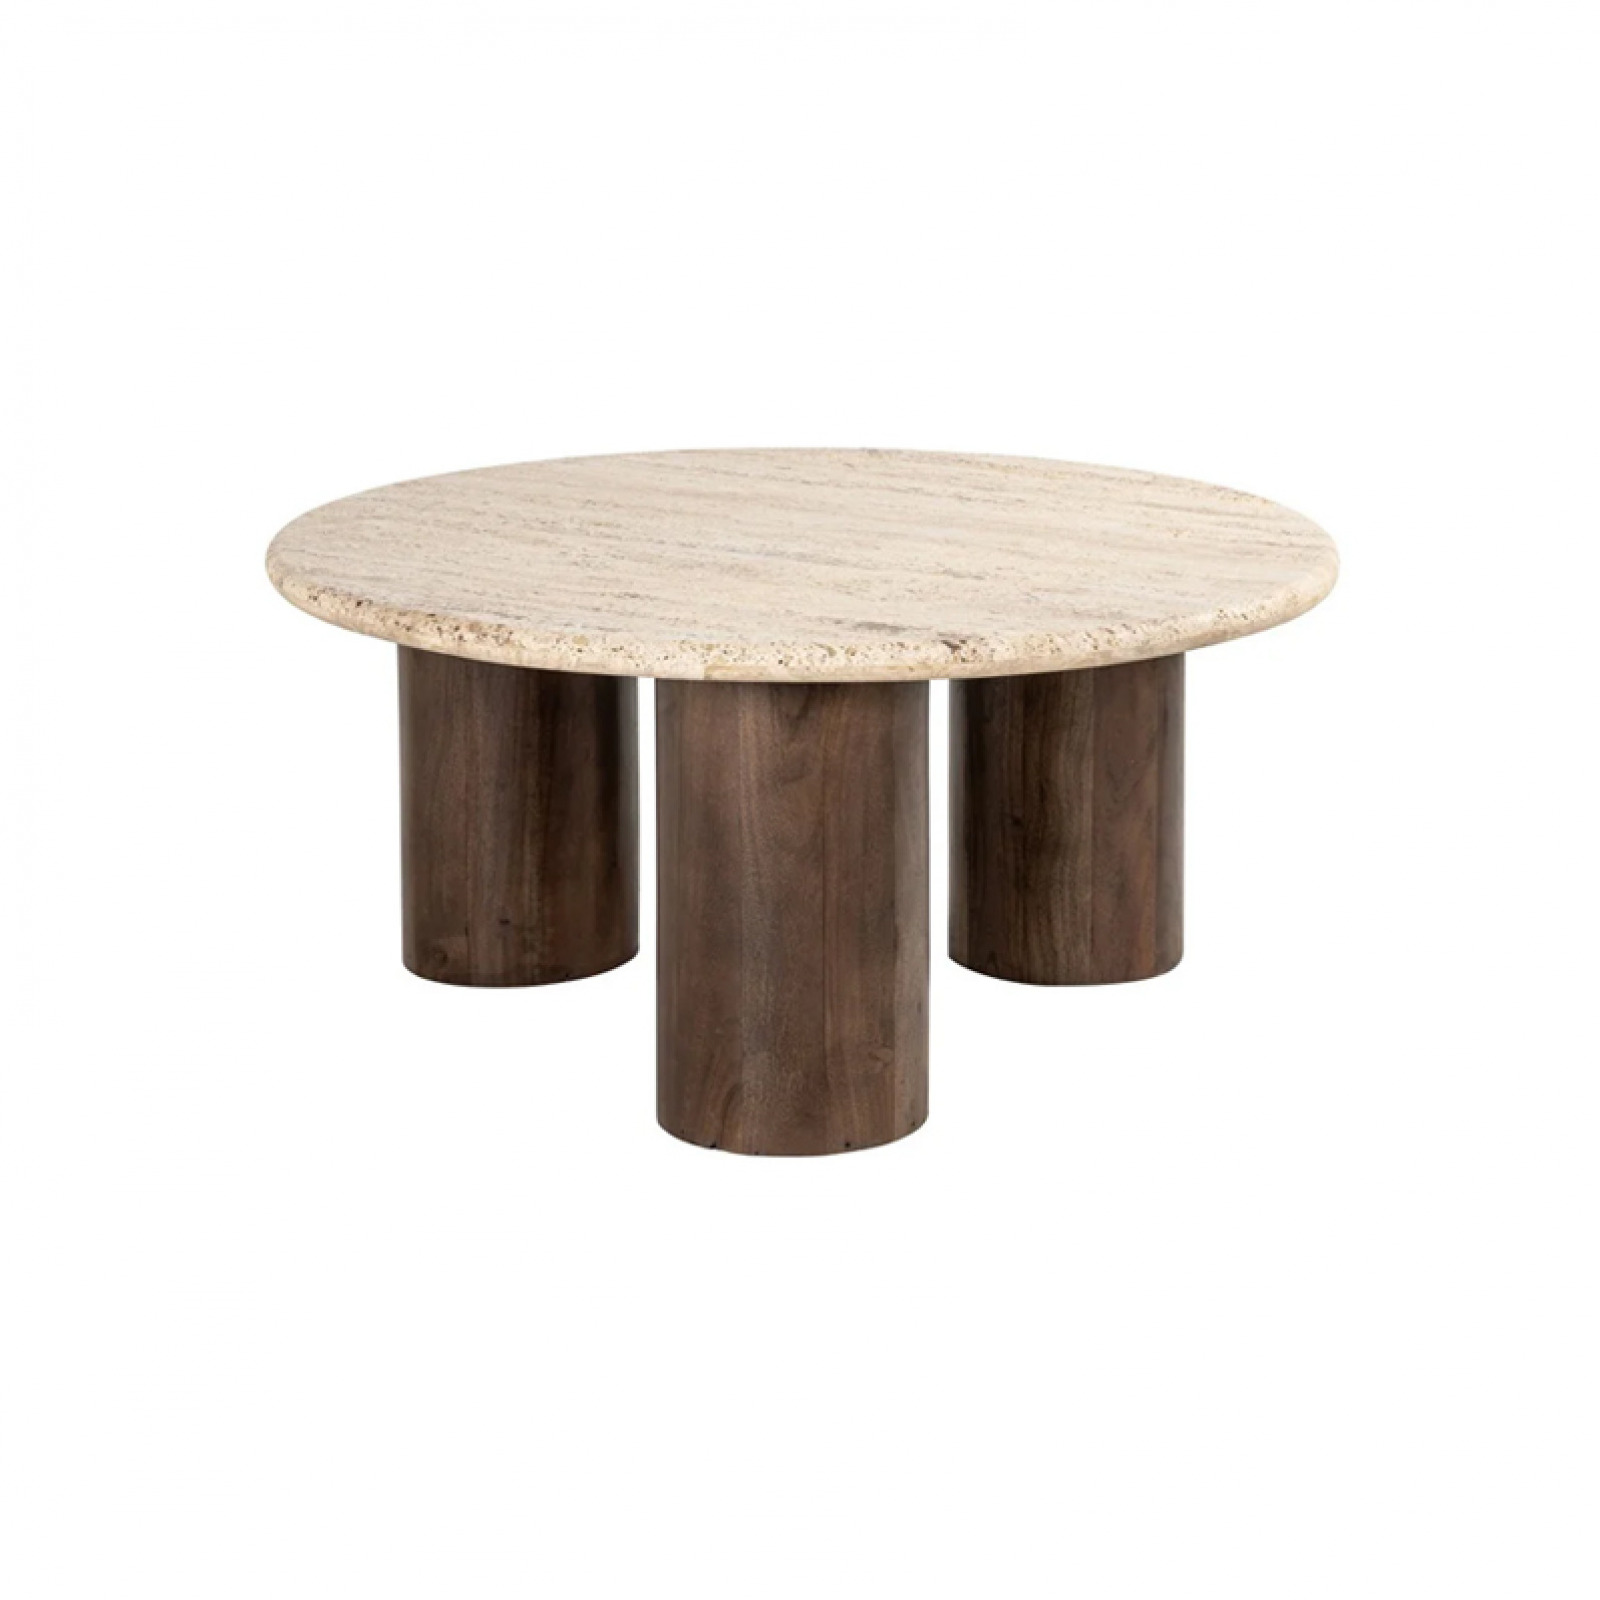 Douglas round coffee table